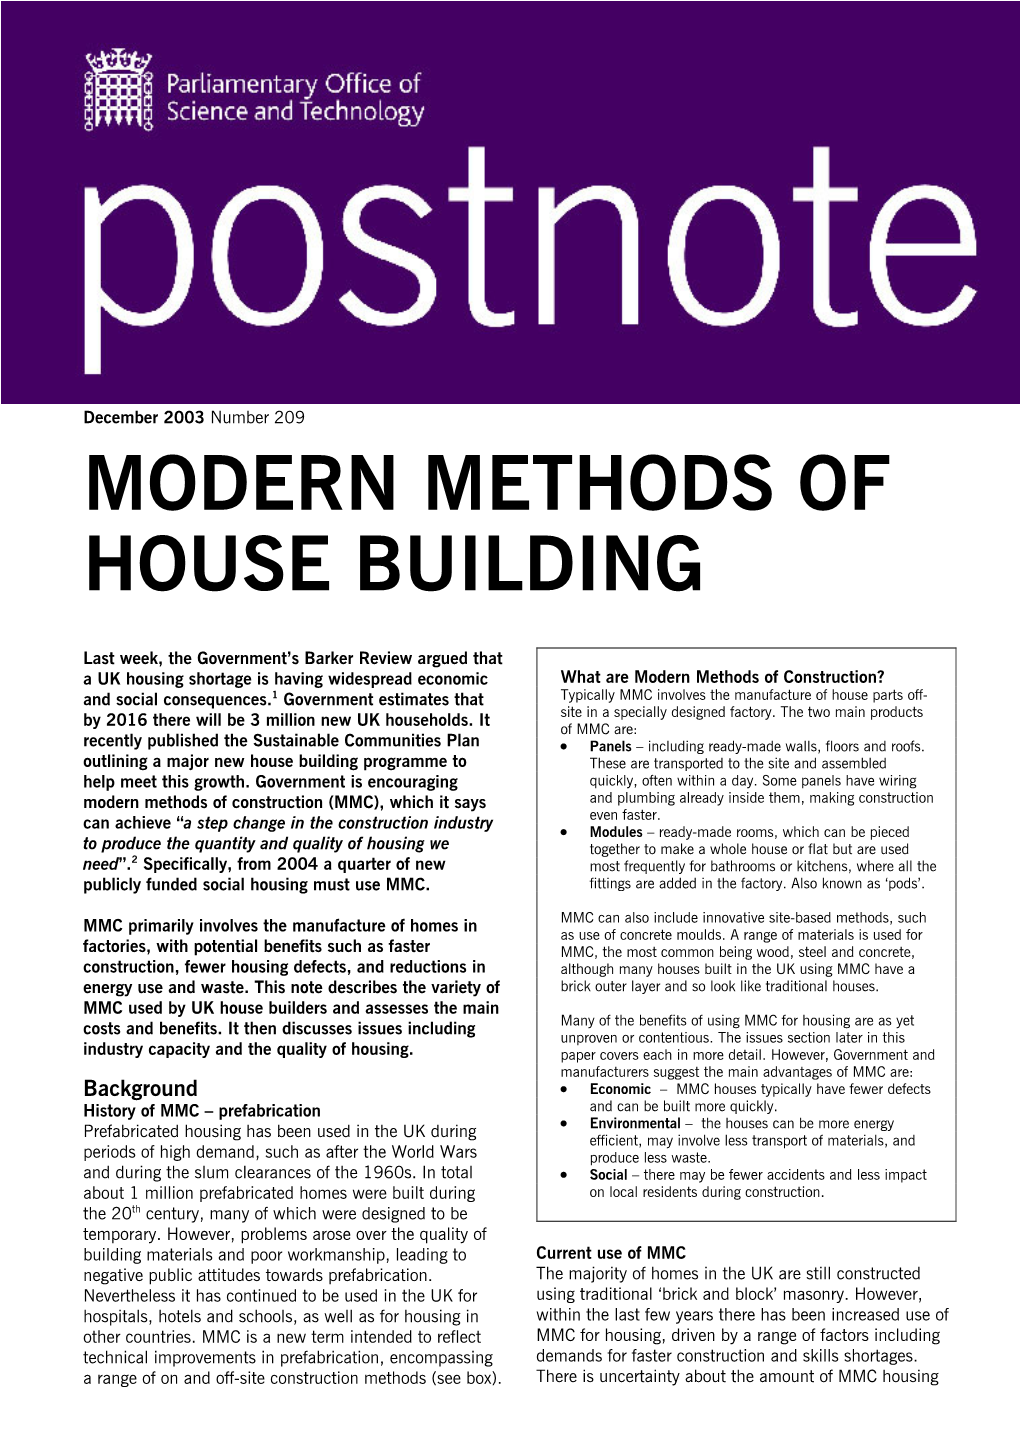 Modern Methods of House Building